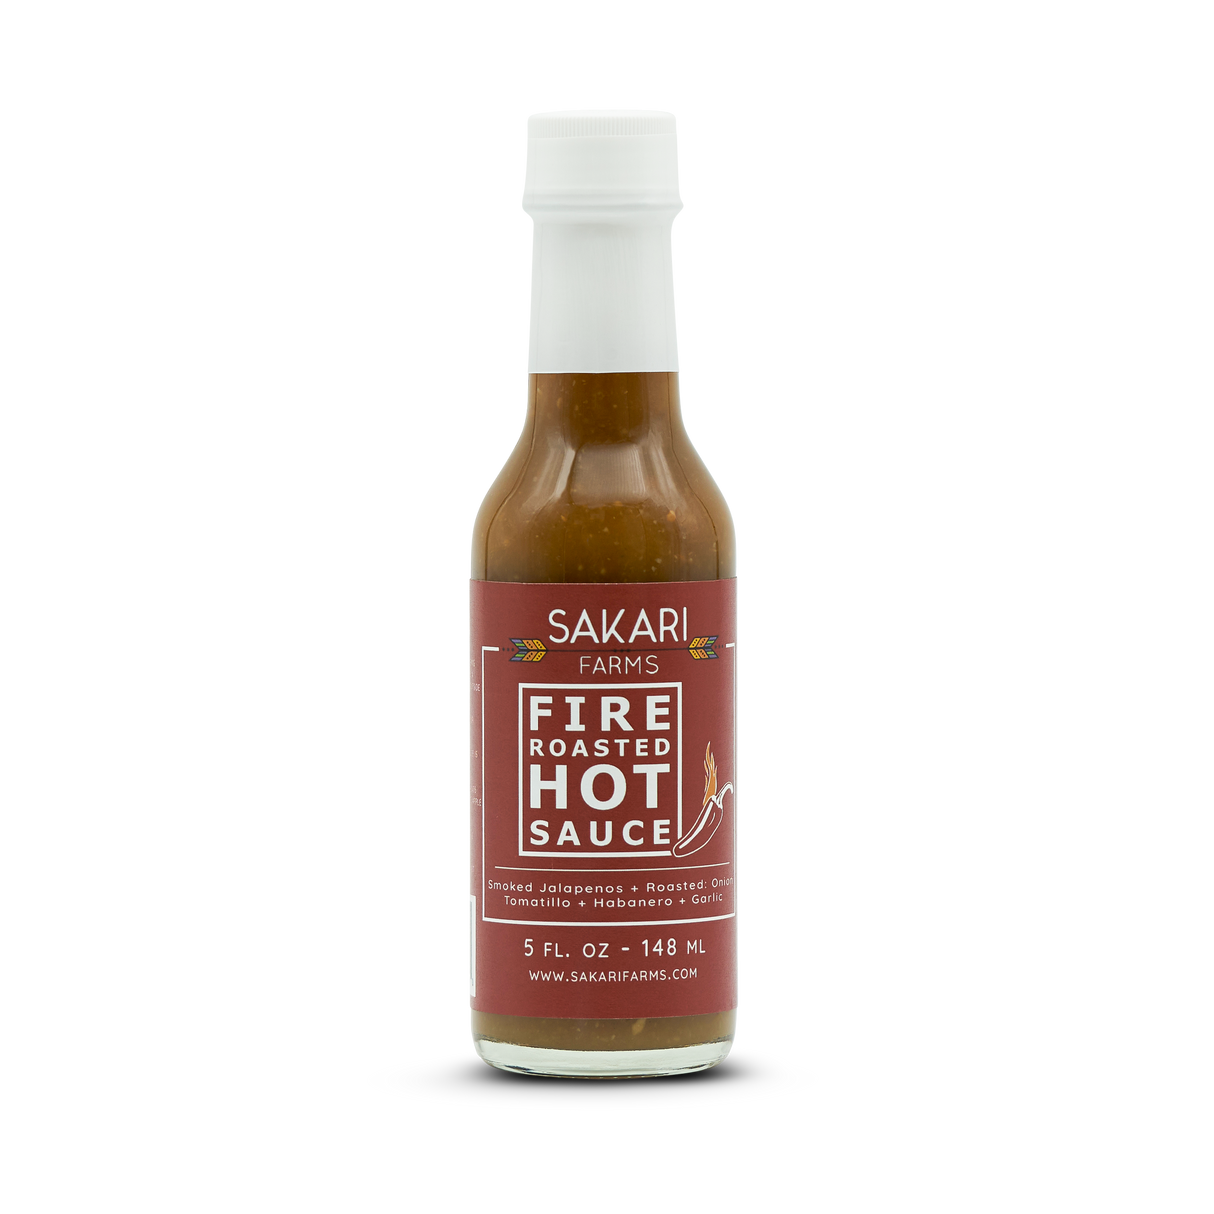 Sakari Farms Fire Roasted Hot Sauce